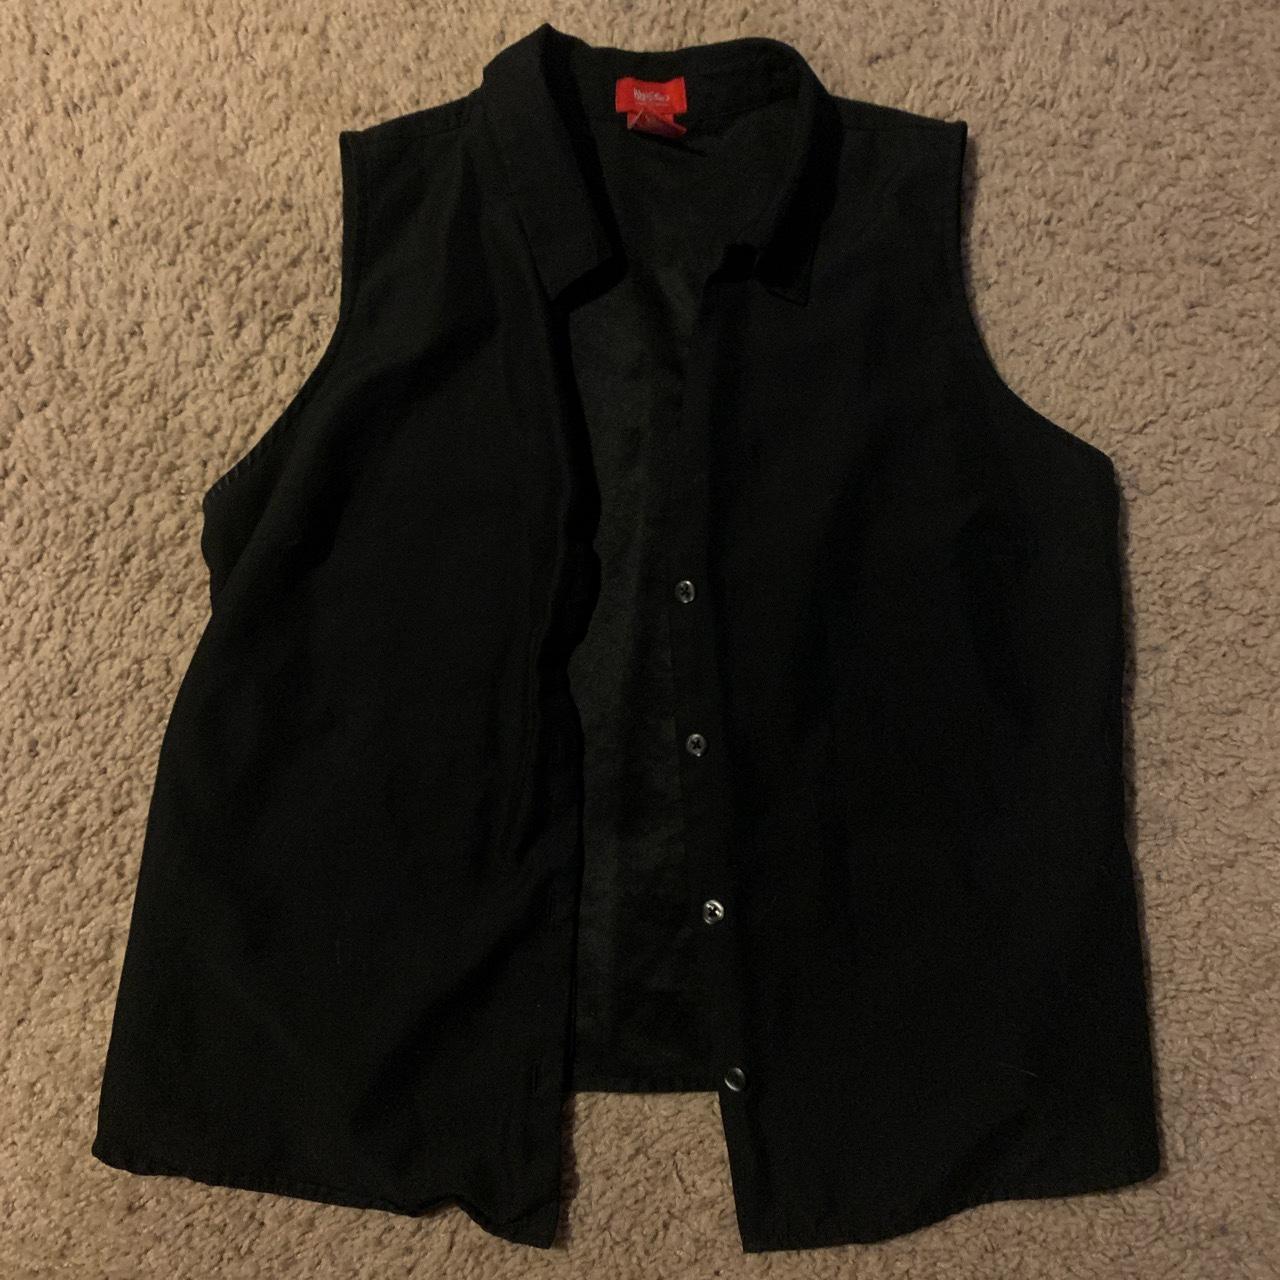 Black button-up shirt vest, labeled size large but... - Depop